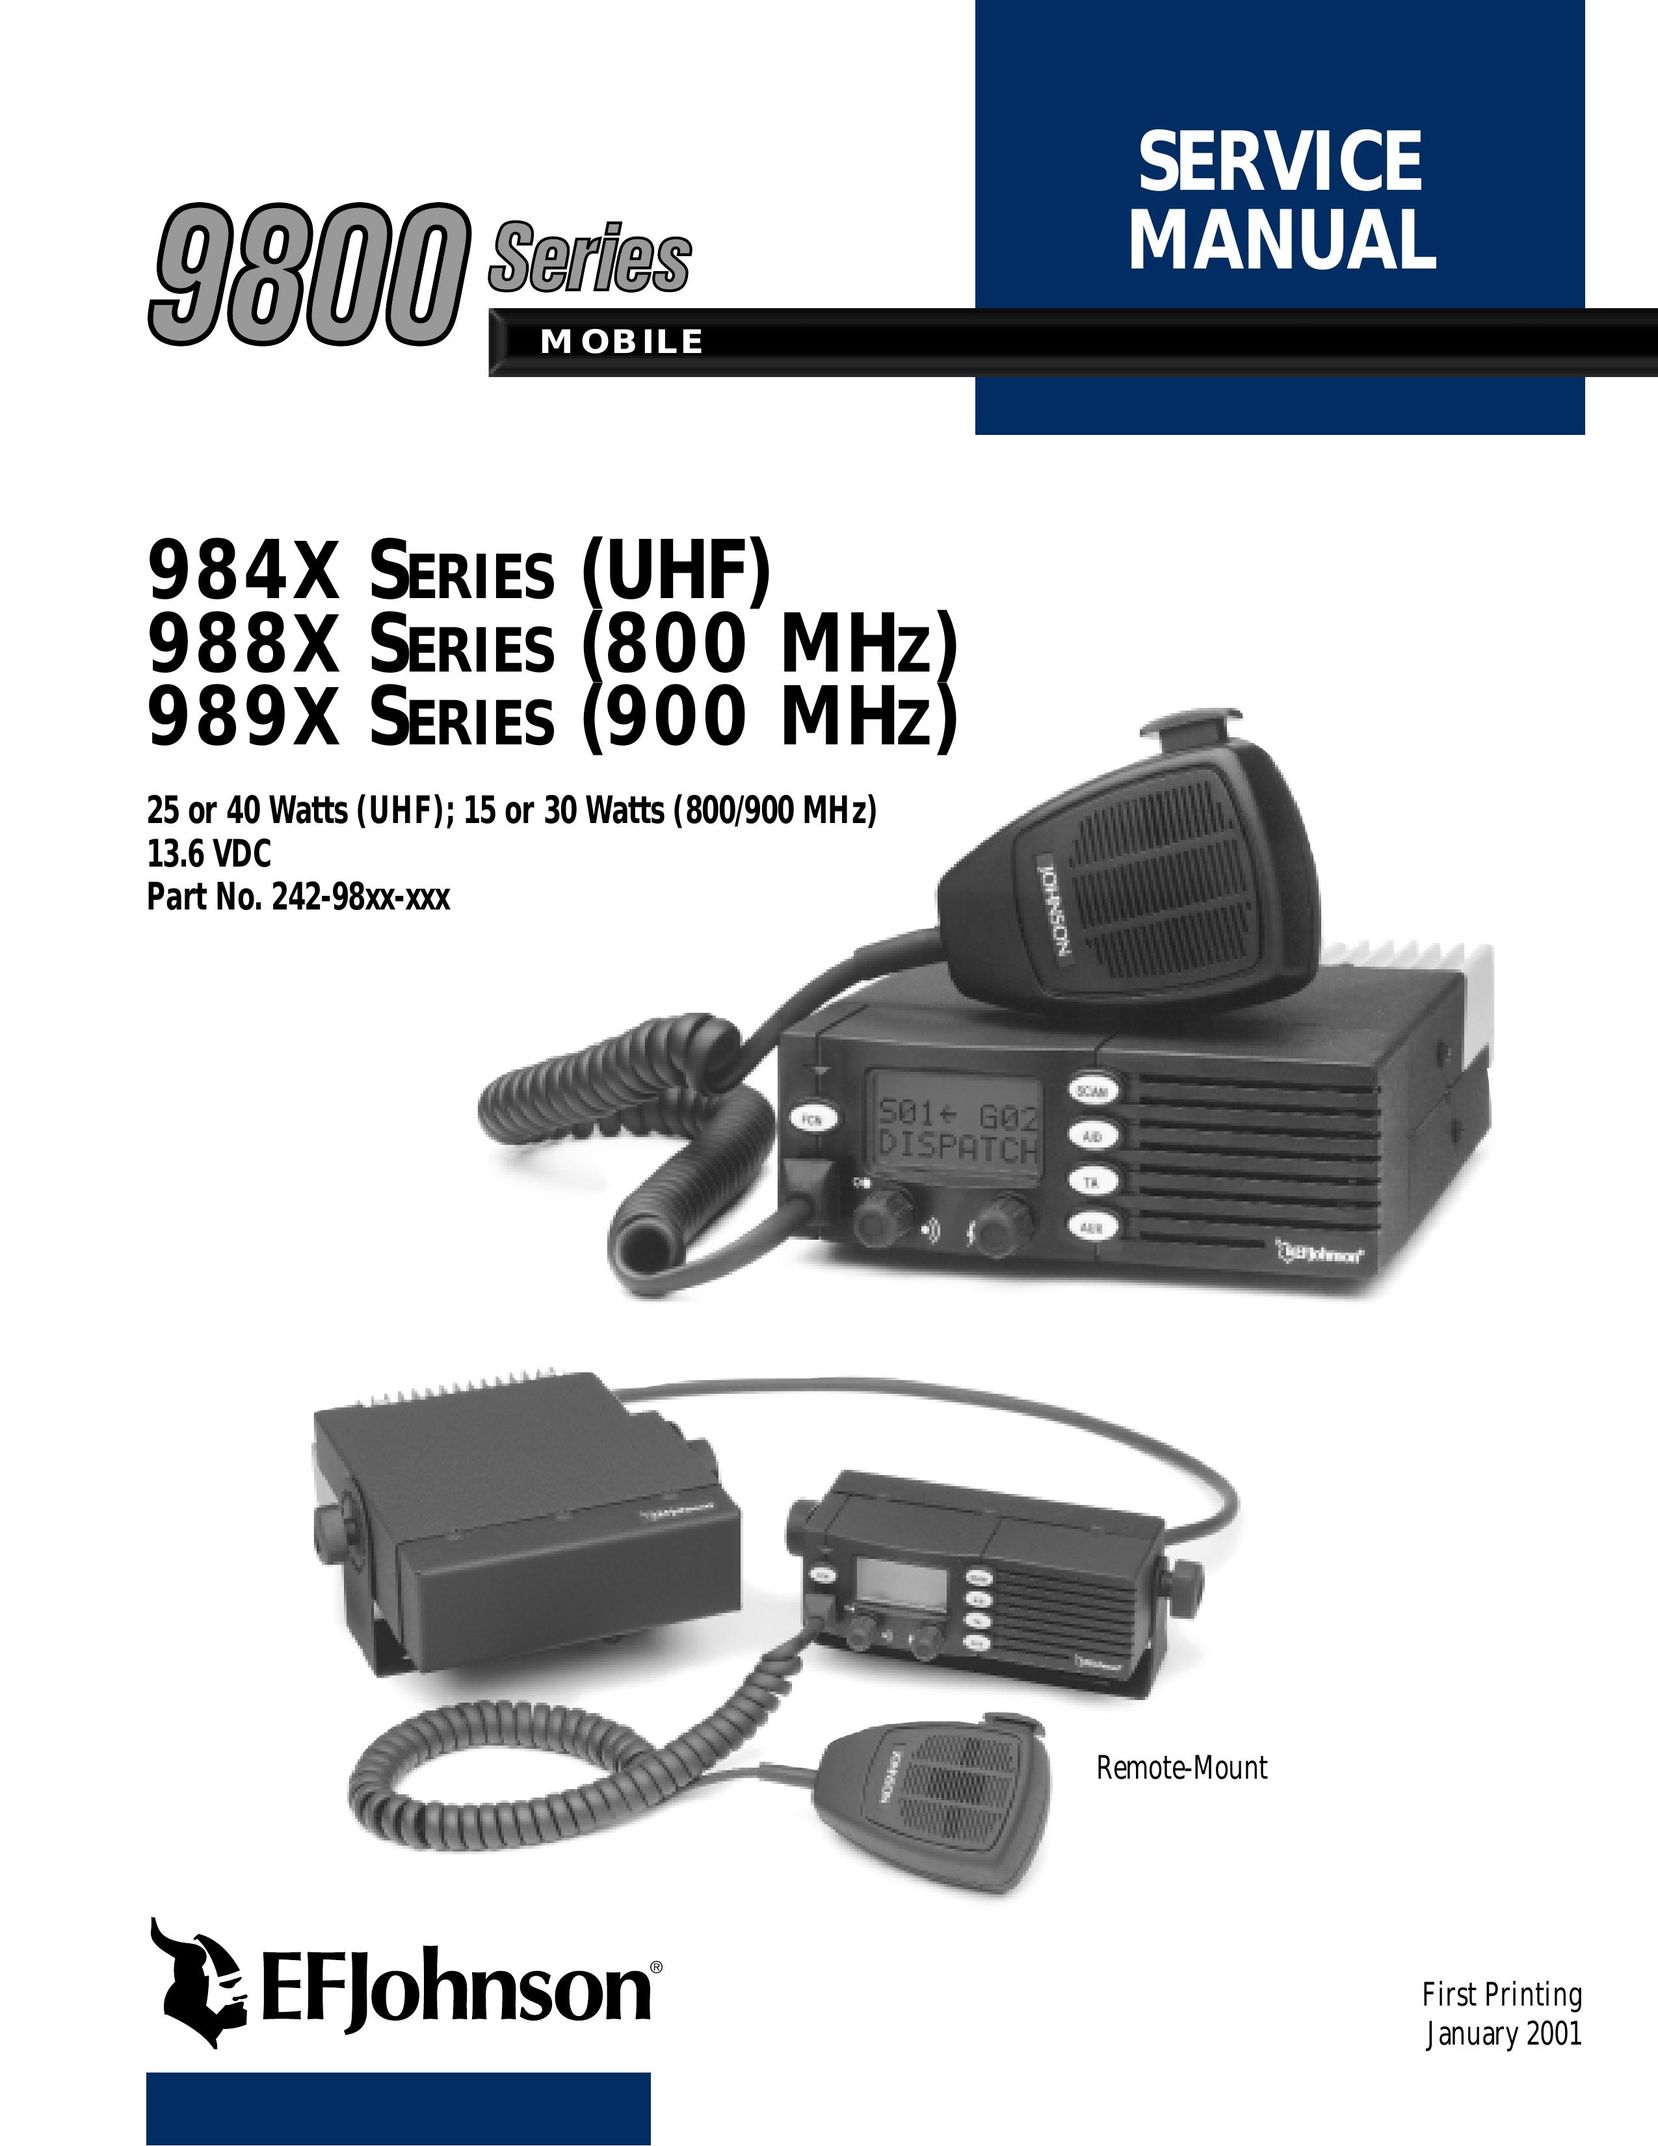 EFJohnson 9800 SERIES Two-Way Radio User Manual